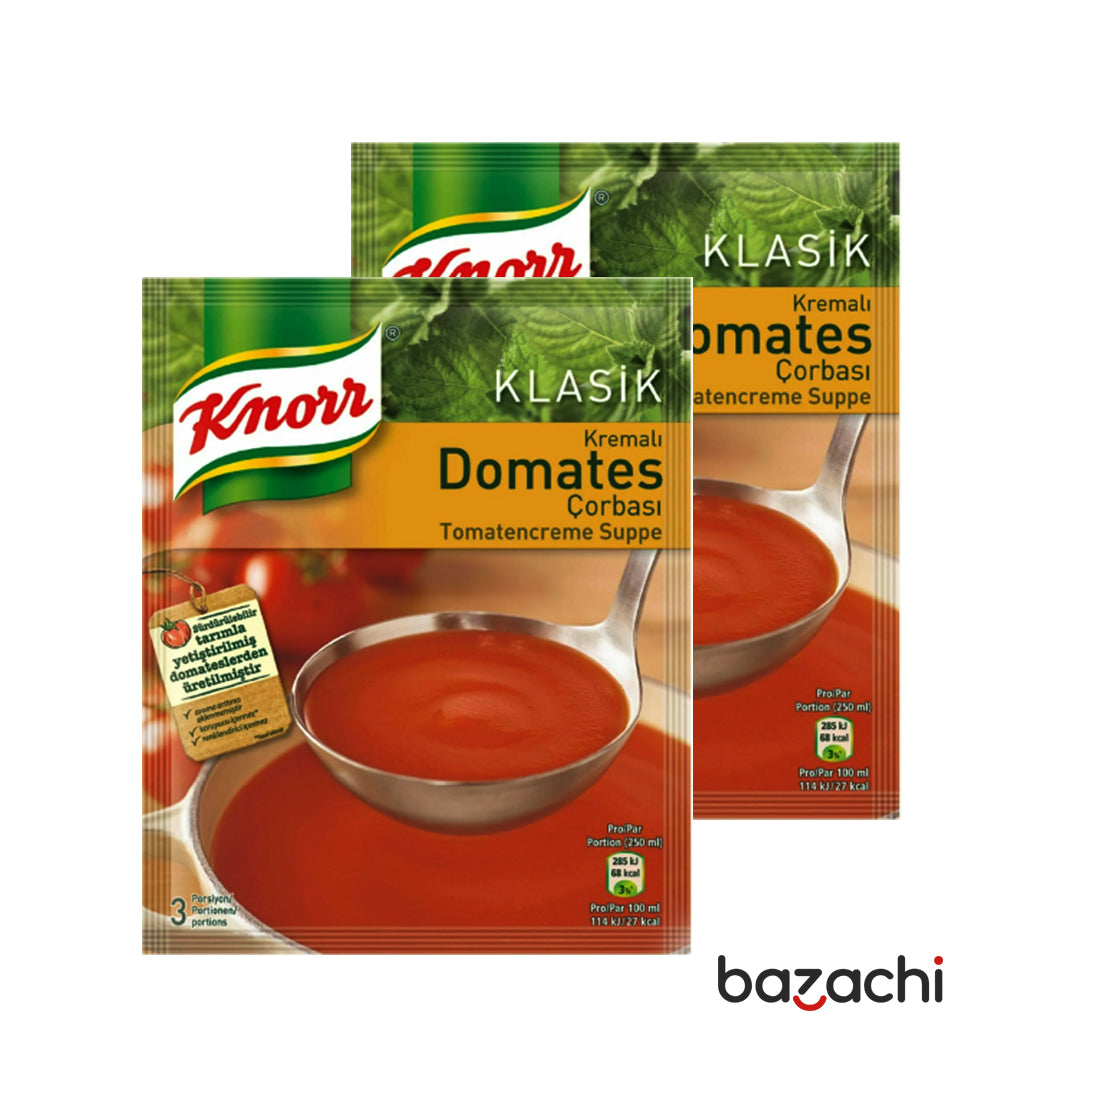 Knorr Cream Classic Tomato Soup - Domates Corbasi (74g)